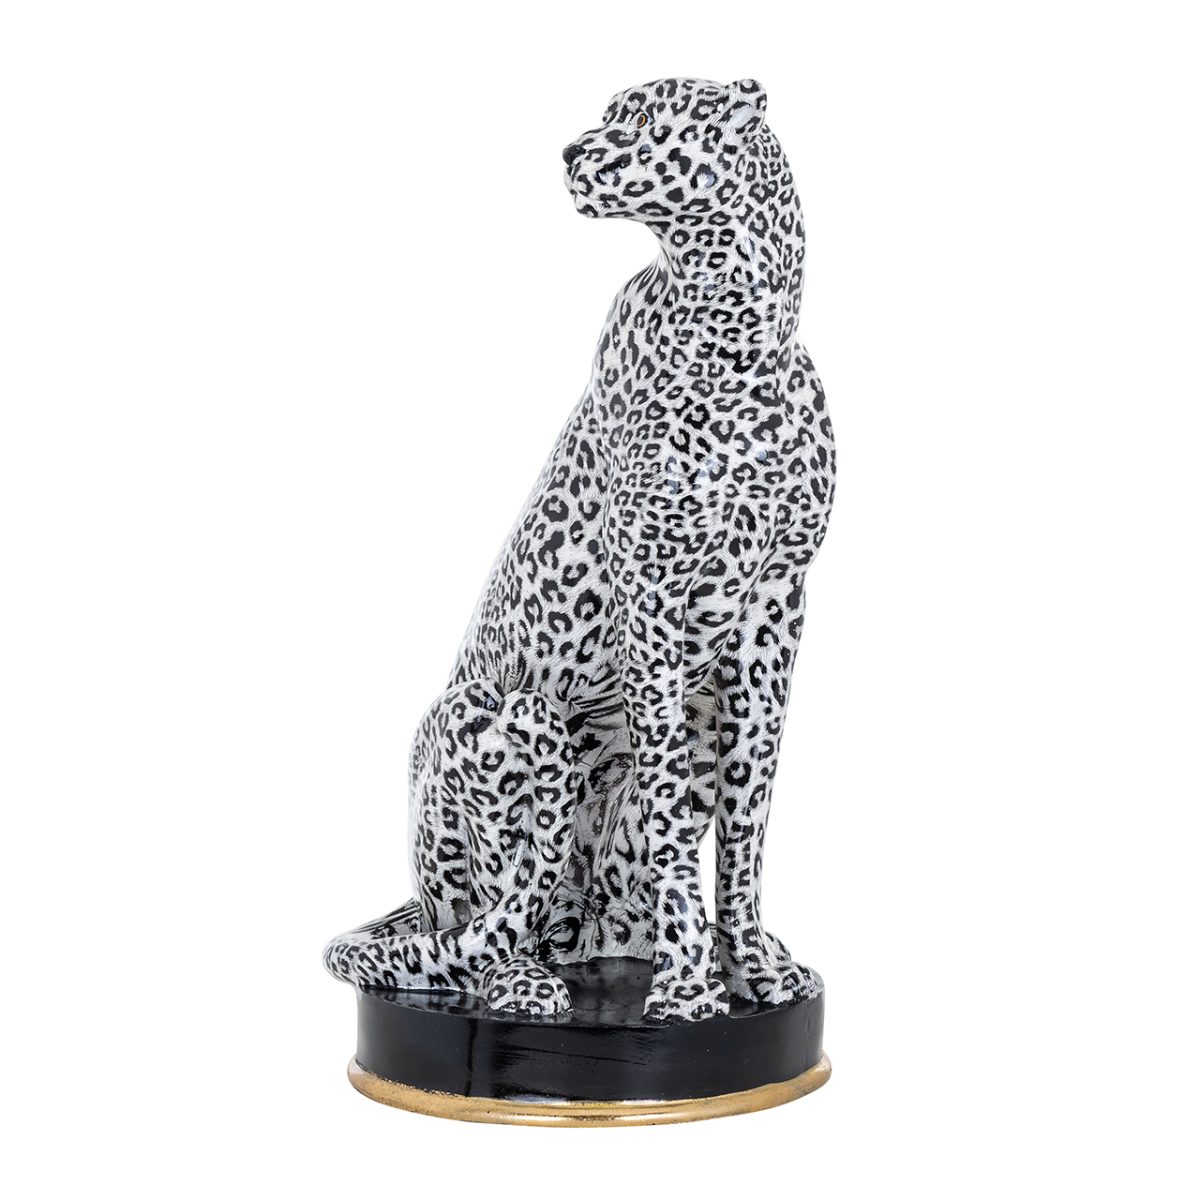 -AD-0025 - Deco object Cheetah (Black/white)